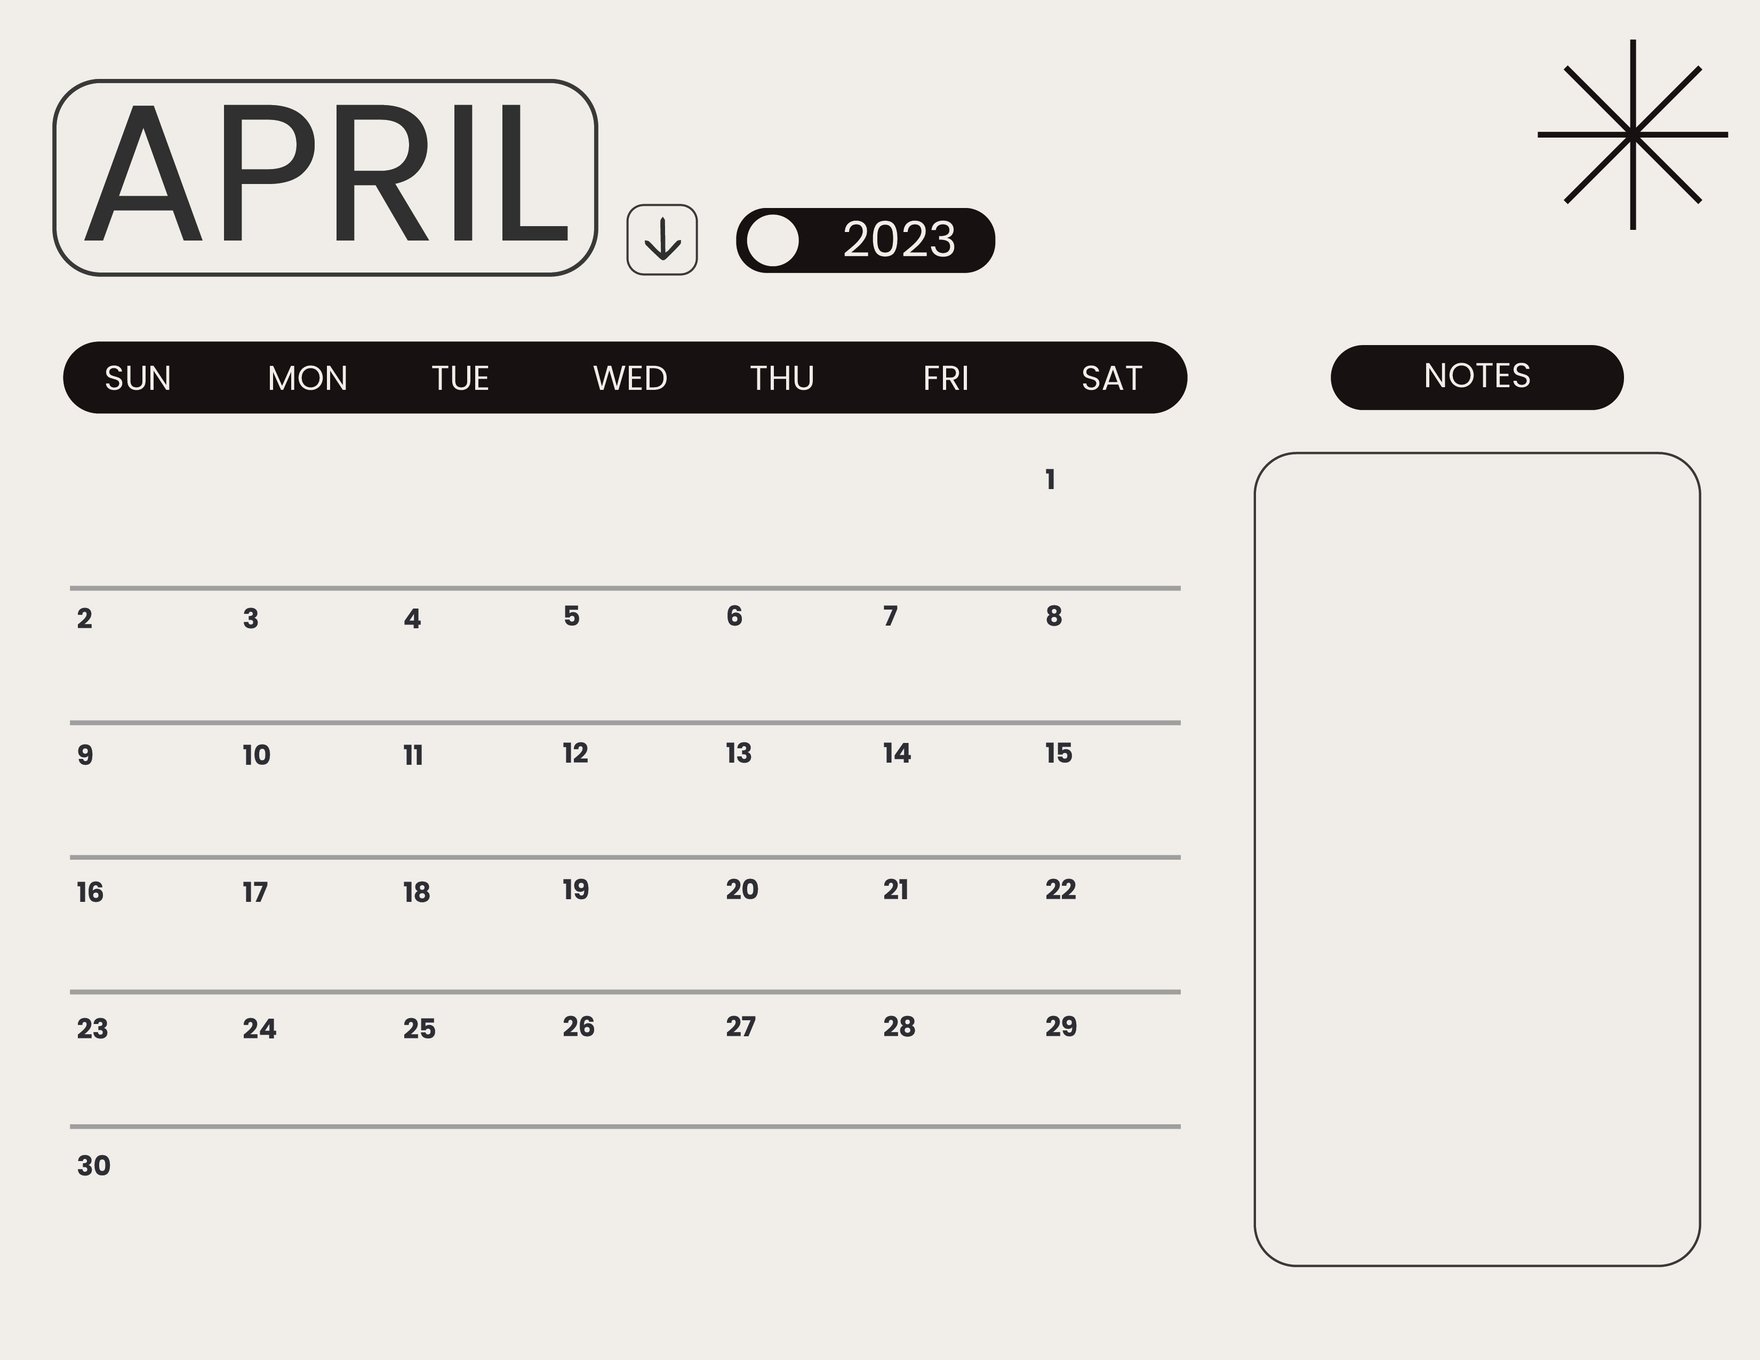 Blank April 2023 Calendar Template in Word, Illustrator, PSD